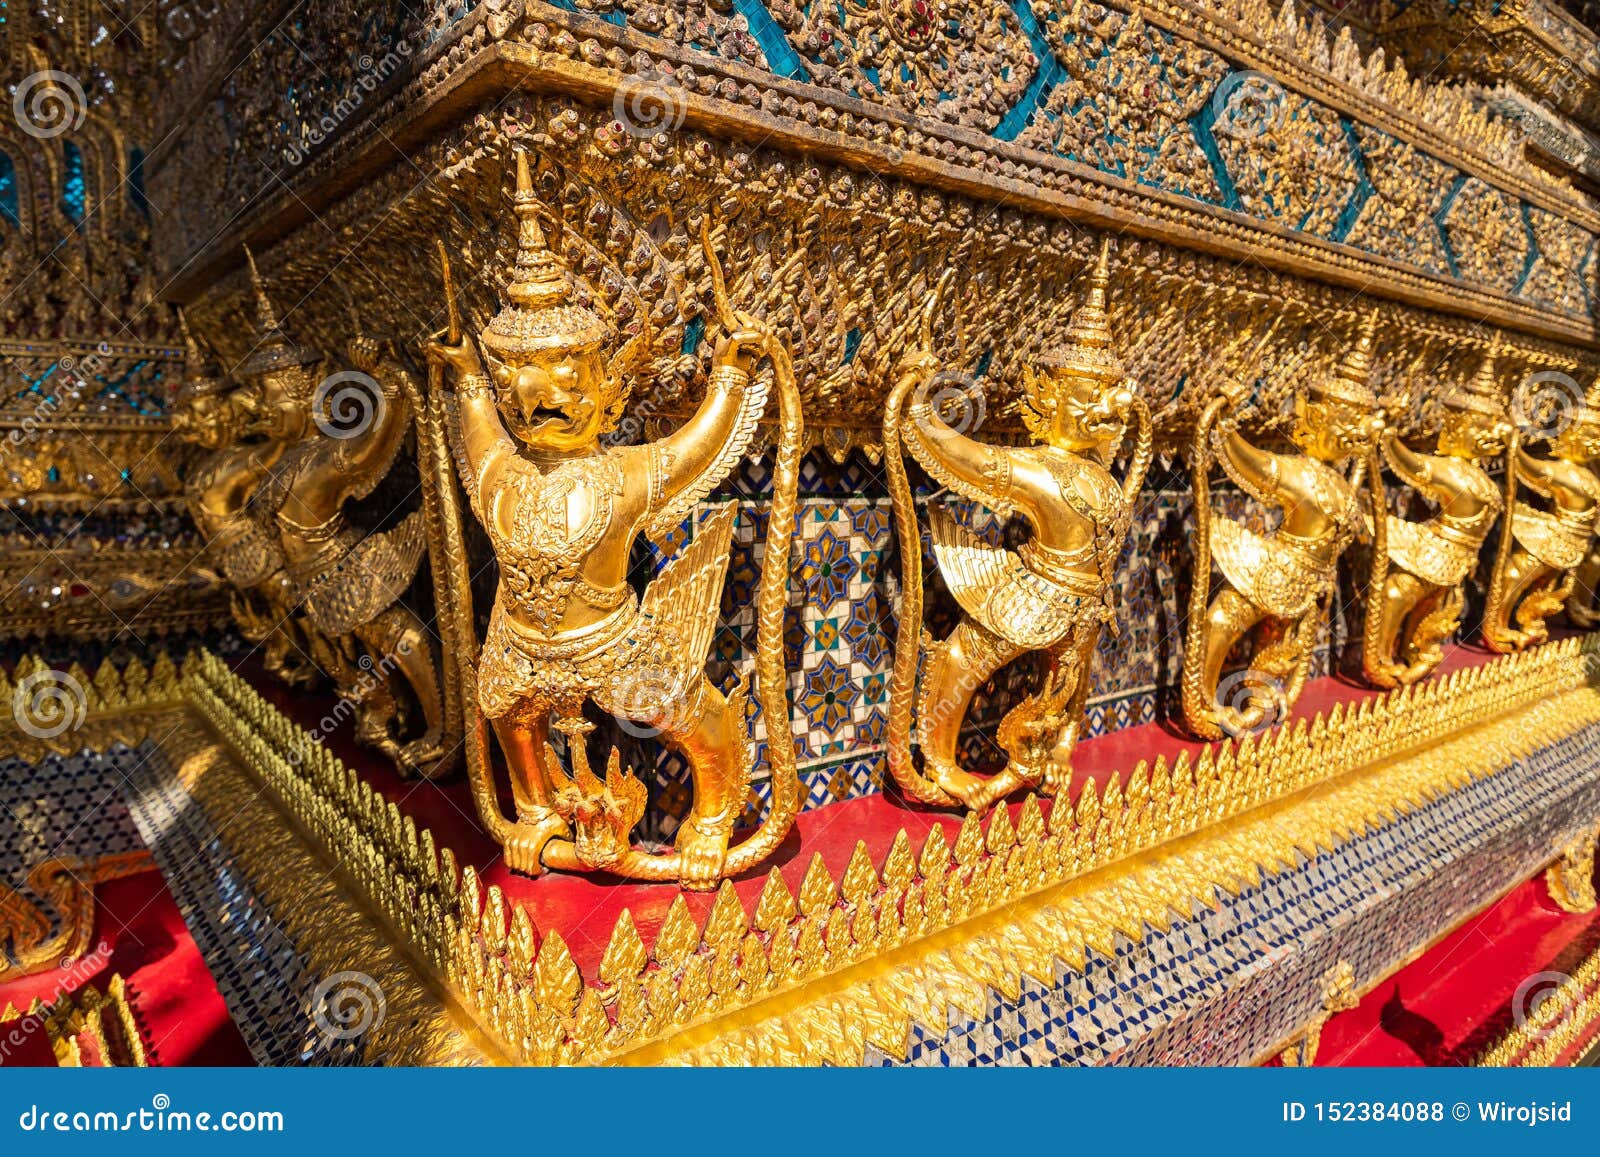 row of golden garuda scuplture wat phra kaew or the temple of the emerald buddha